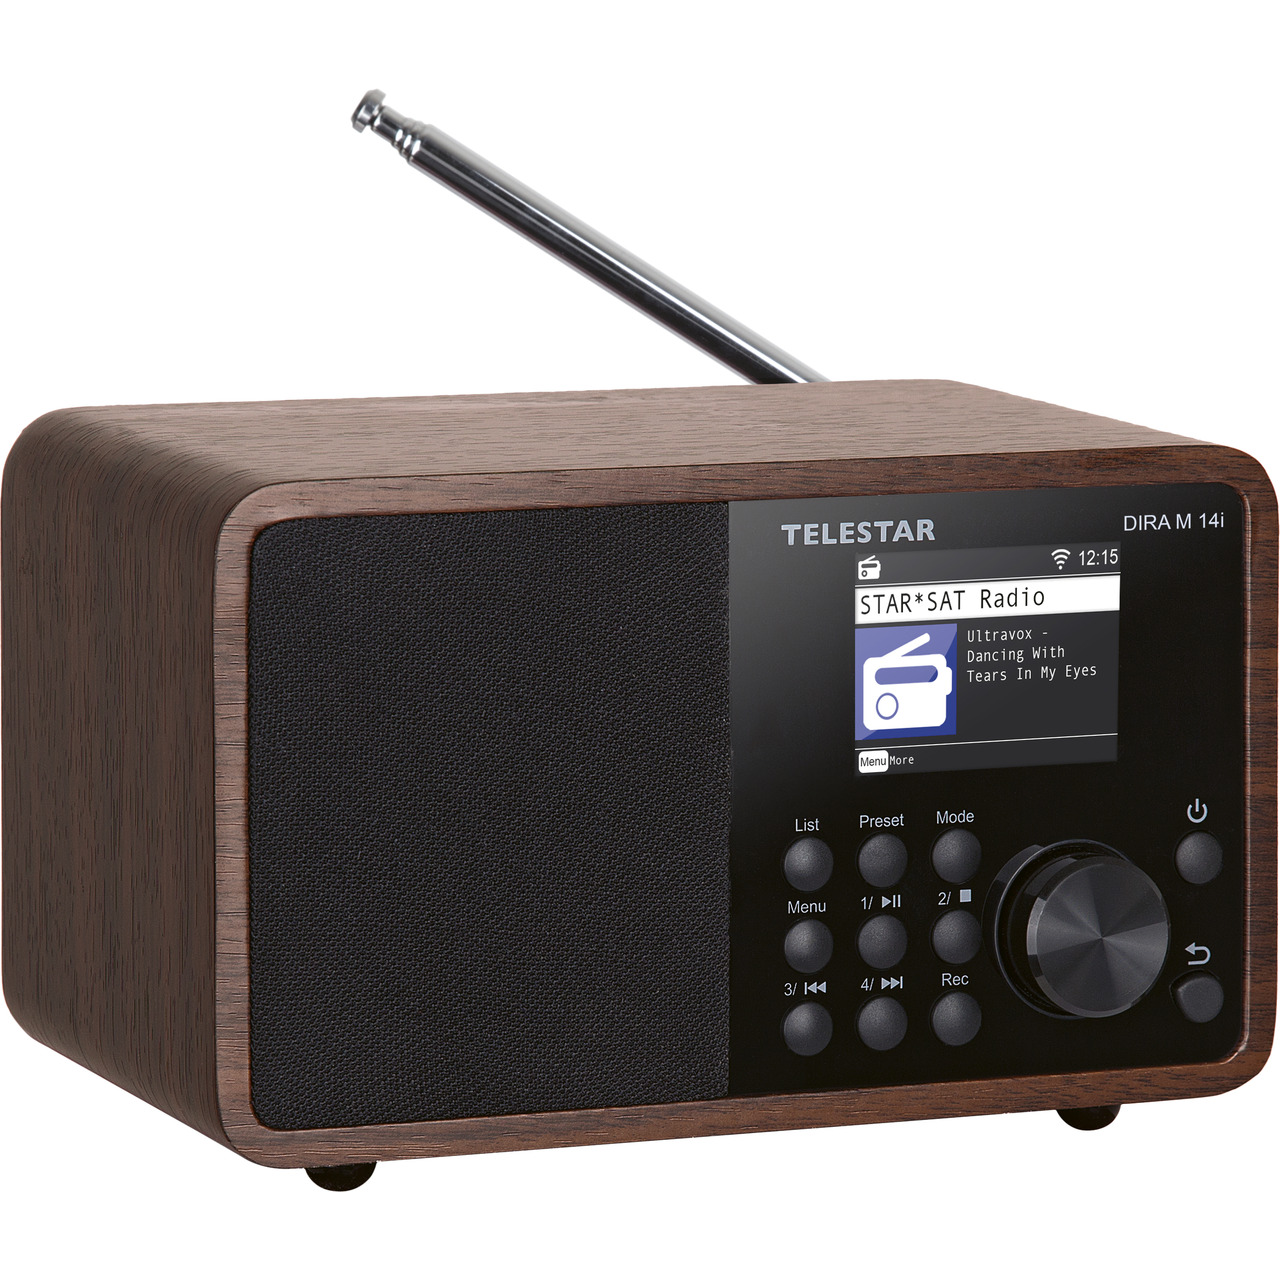 Telestar Hybrid-Digitalradio DIRA M14i- DAB+-UKW- Internetradio- 15-W-RMS- Bluetooth- Holz-Dekor